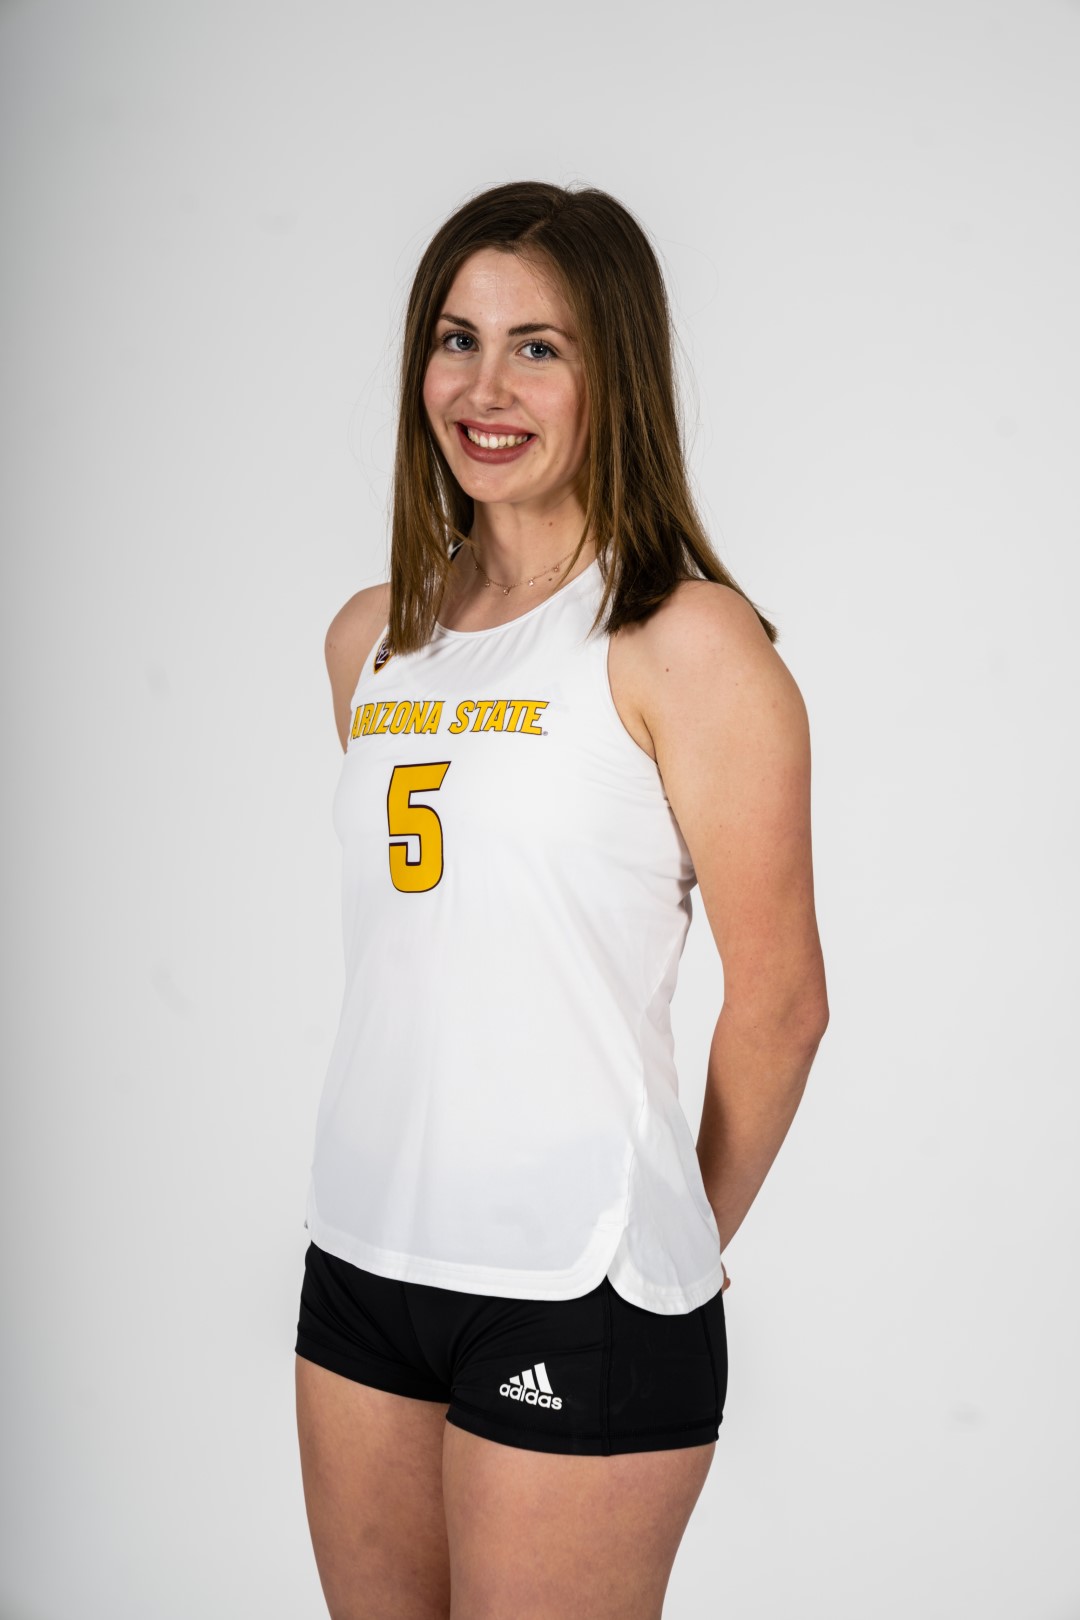 Lexi Sweeney athlete profile head shot